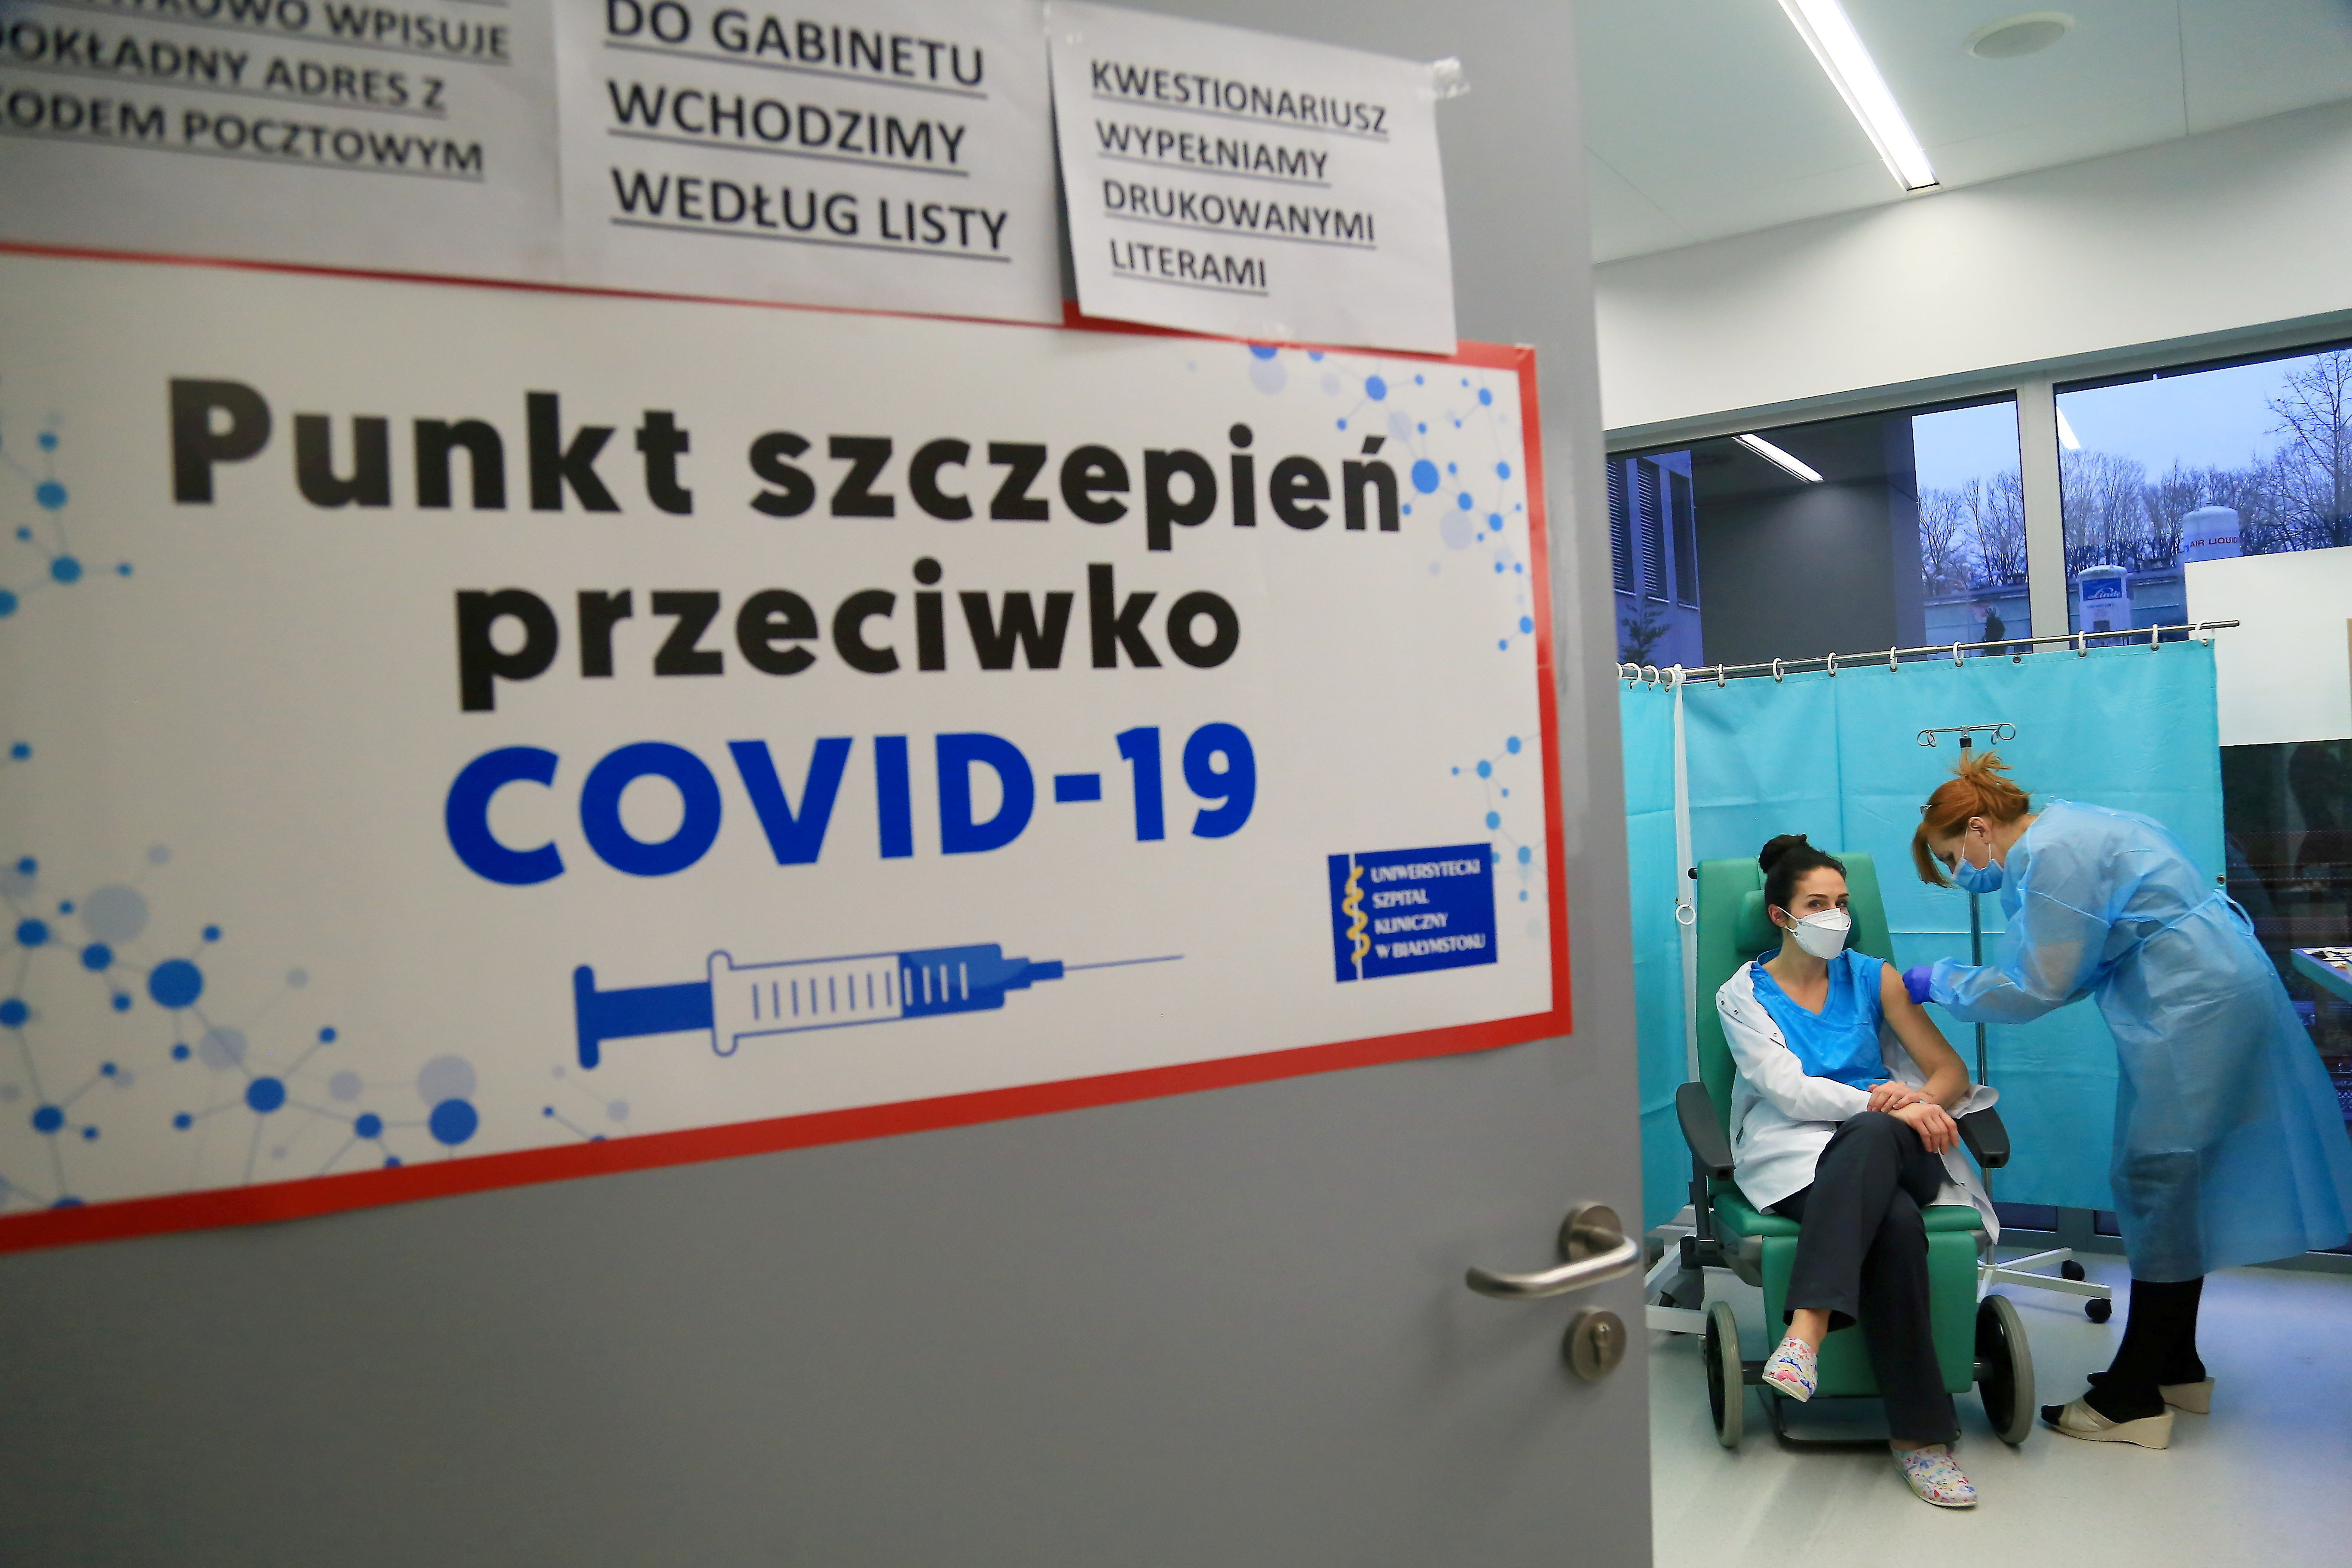 Vaccination against the coronavirus disease (COVID-19) in Bialystok